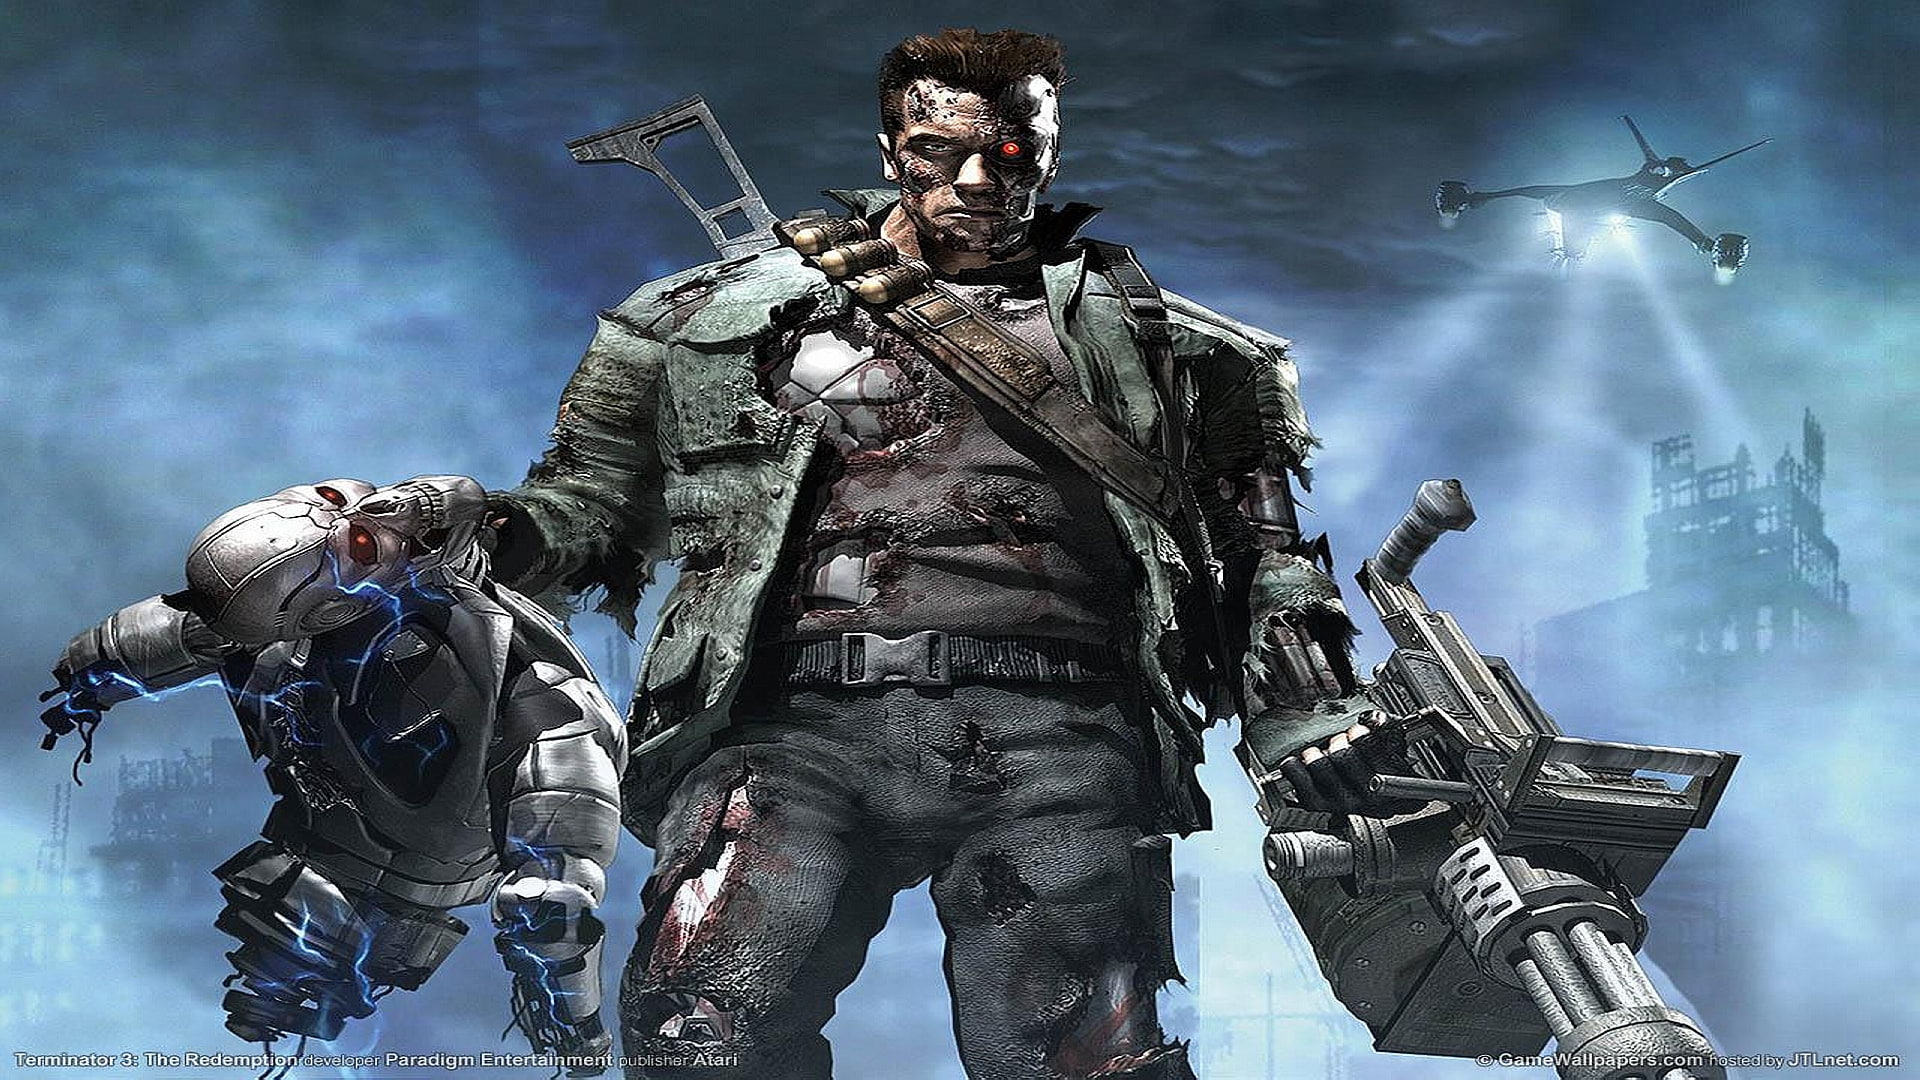 Terminator Console Game, the terminator illustration